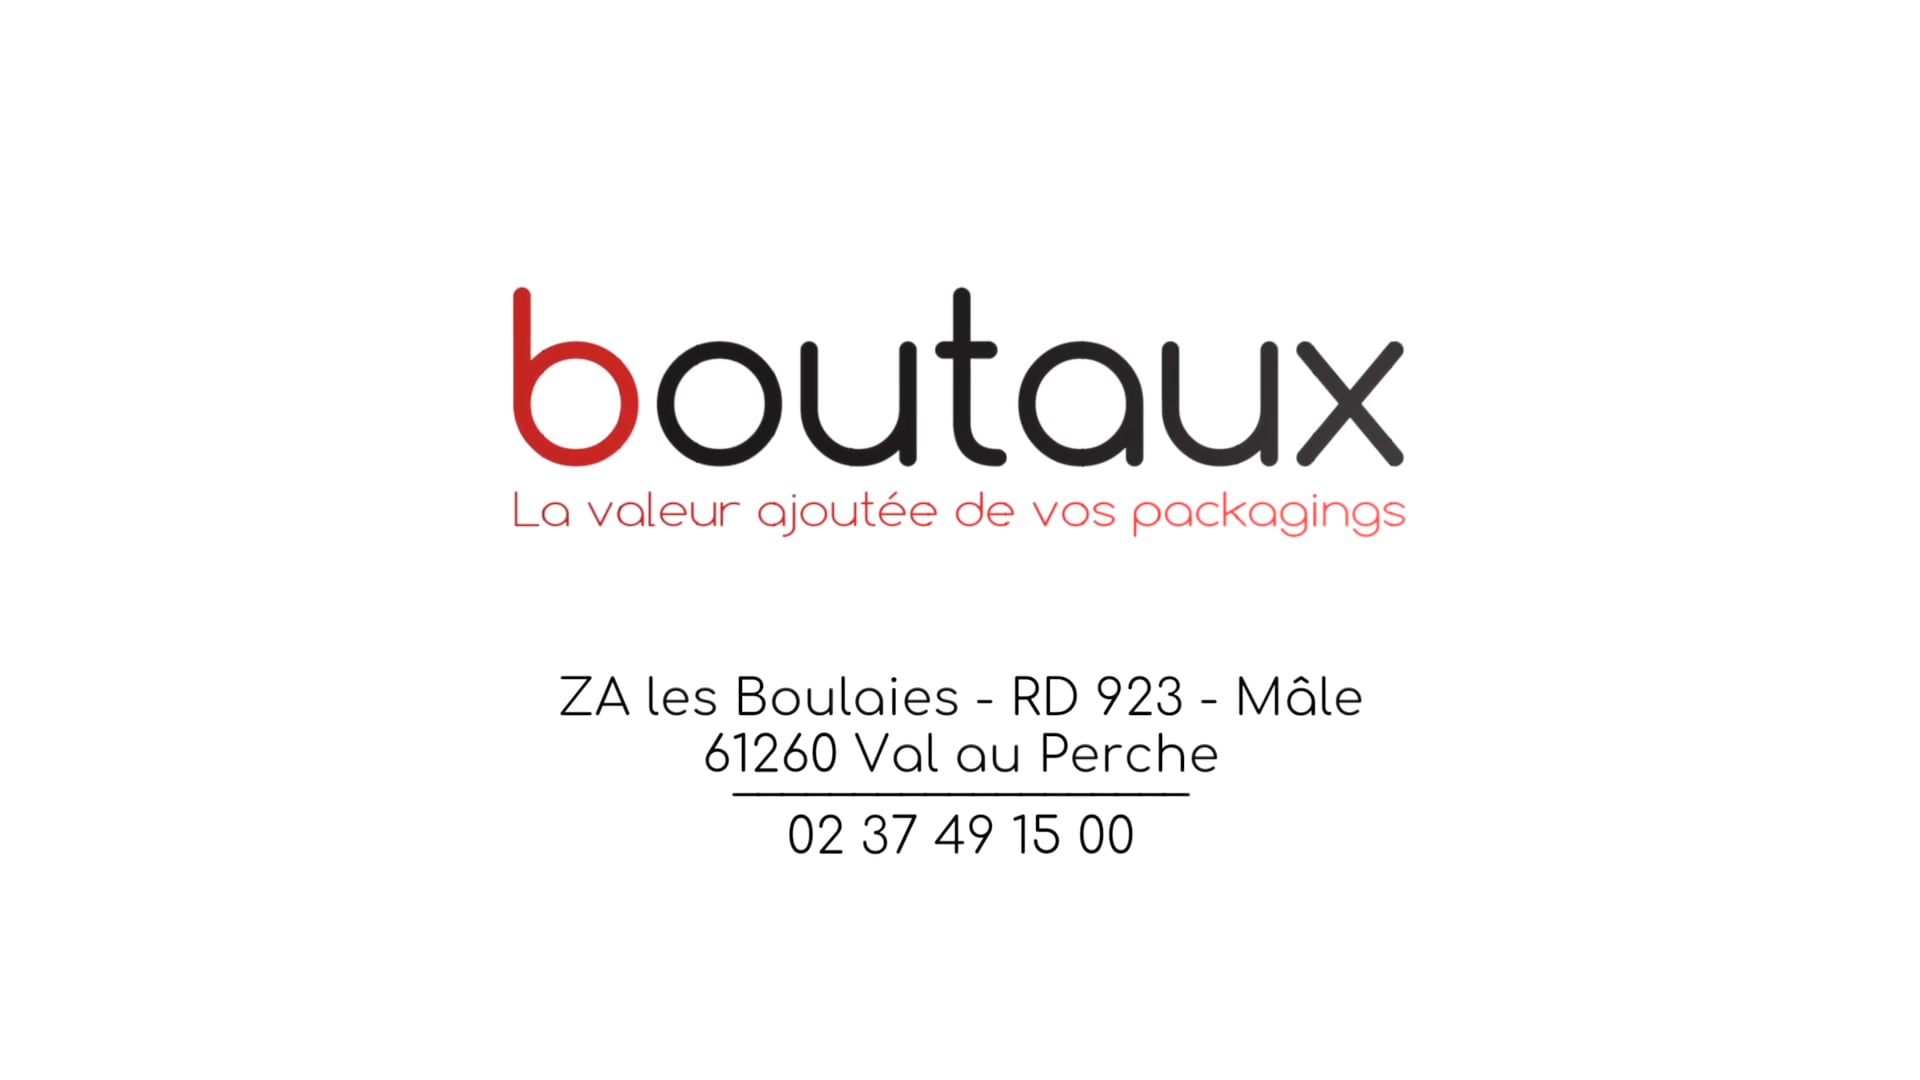 Boutaux Packaging - Visite audiovisuelle V2017